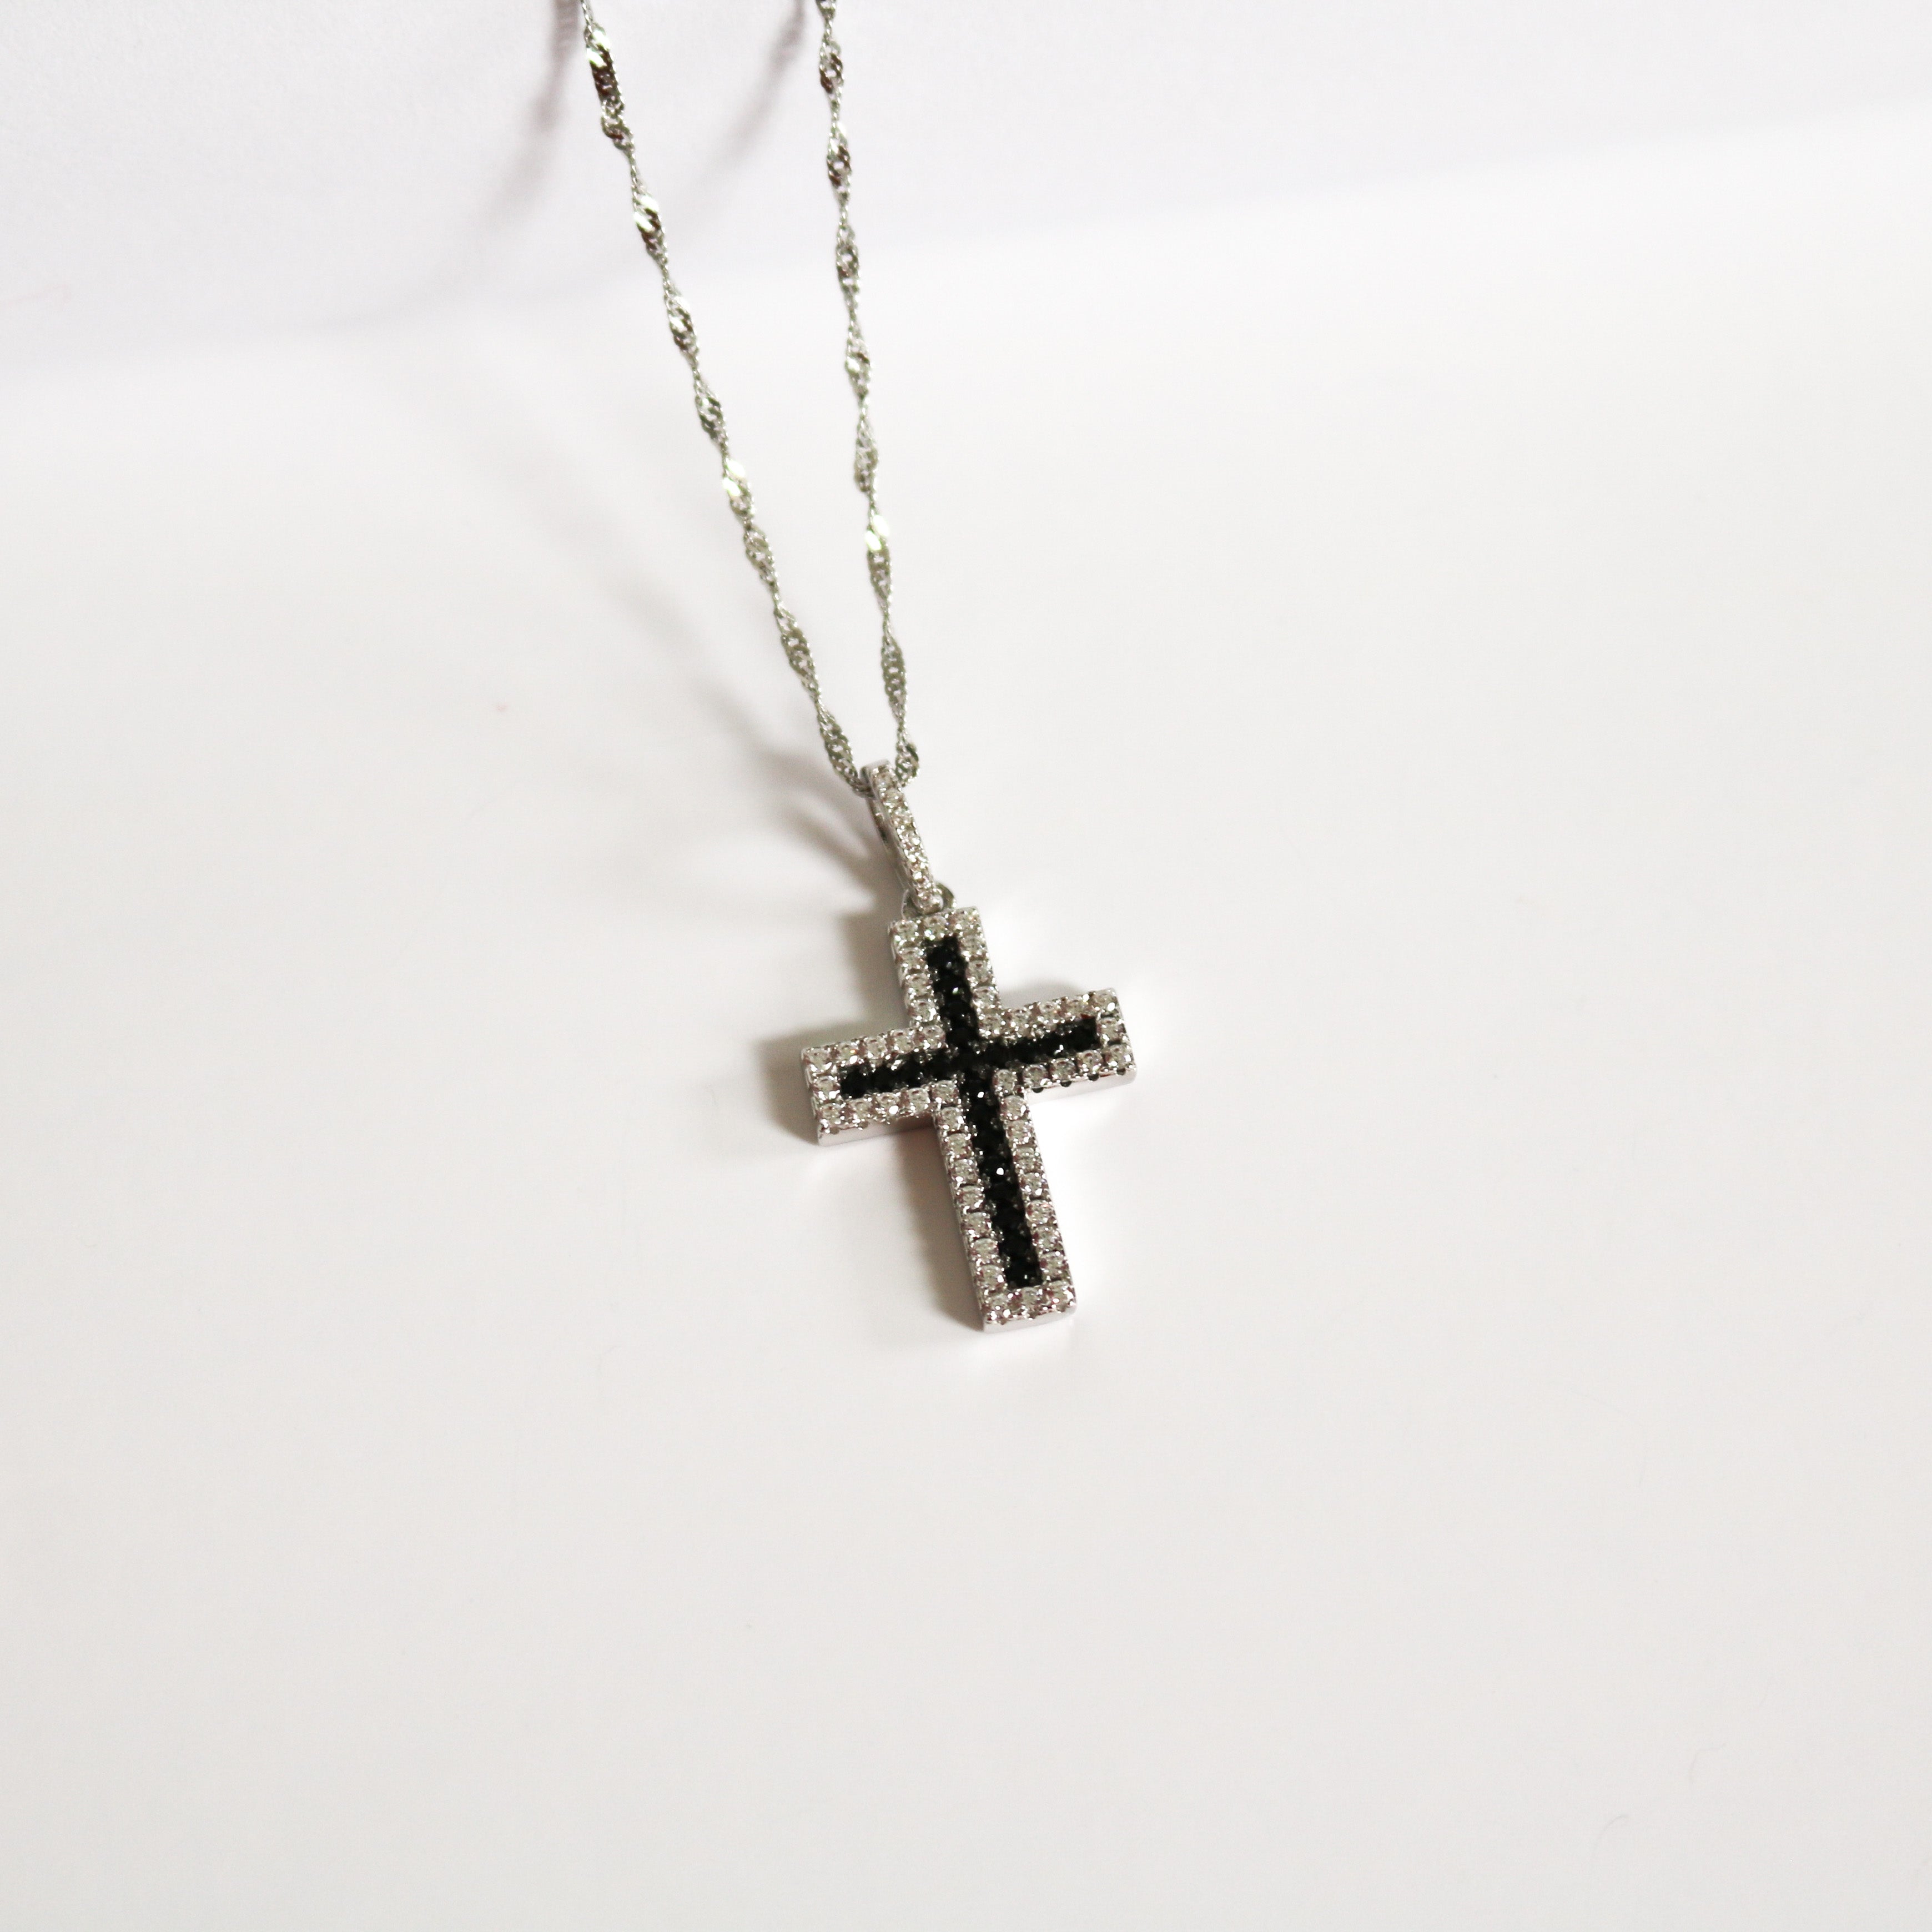 Black Cross Necklace